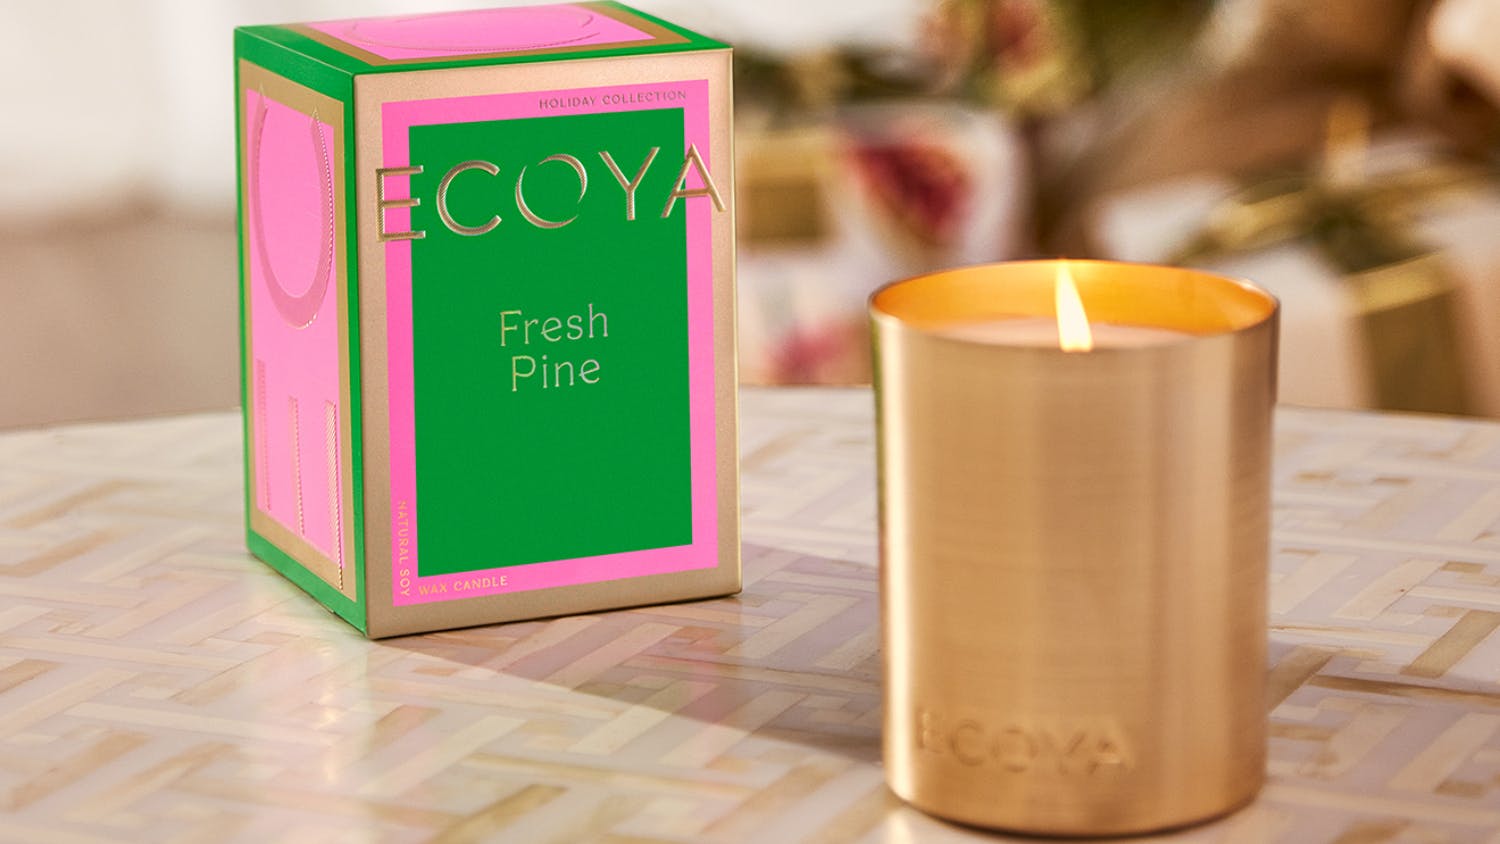 Ecoya 460g Goldie Candle - Fresh Pine